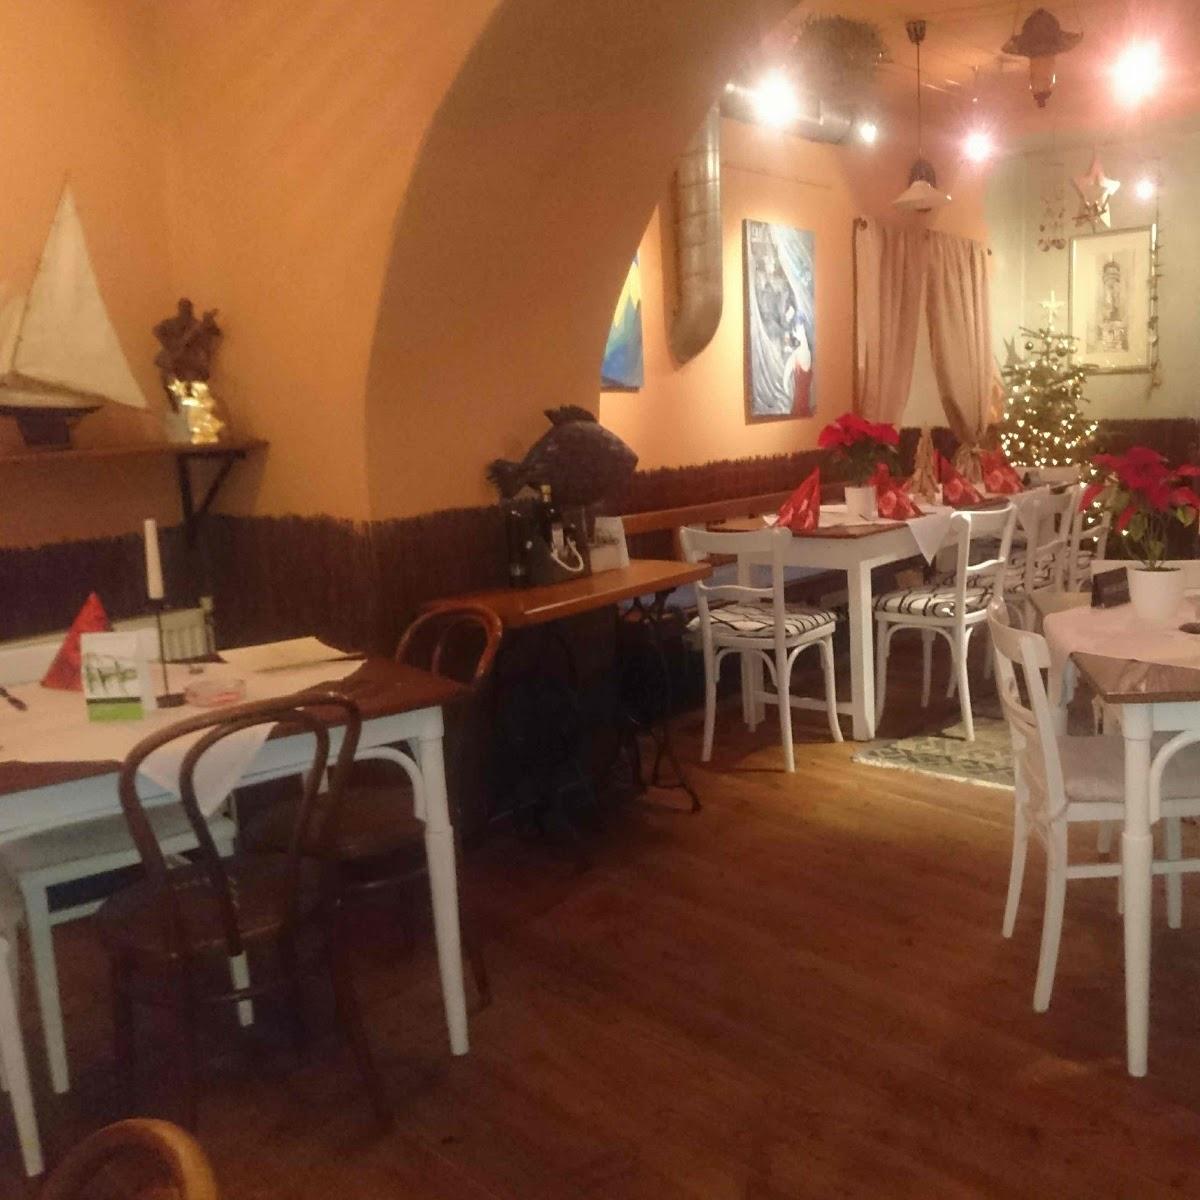 Restaurant "Taverna Perikles" in Gmünd